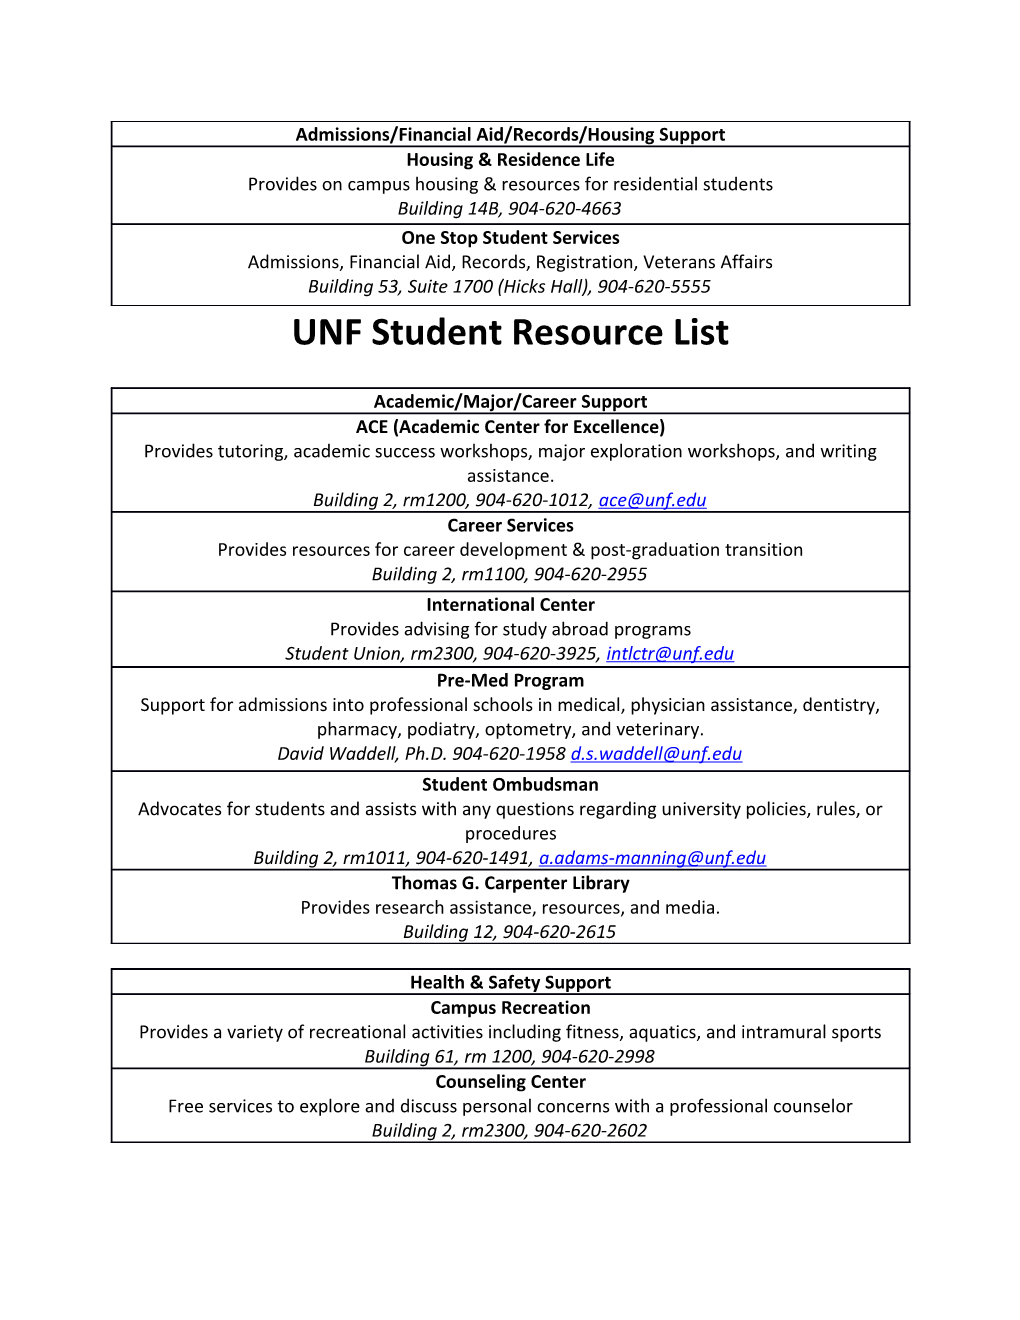 UNF Student Resource List